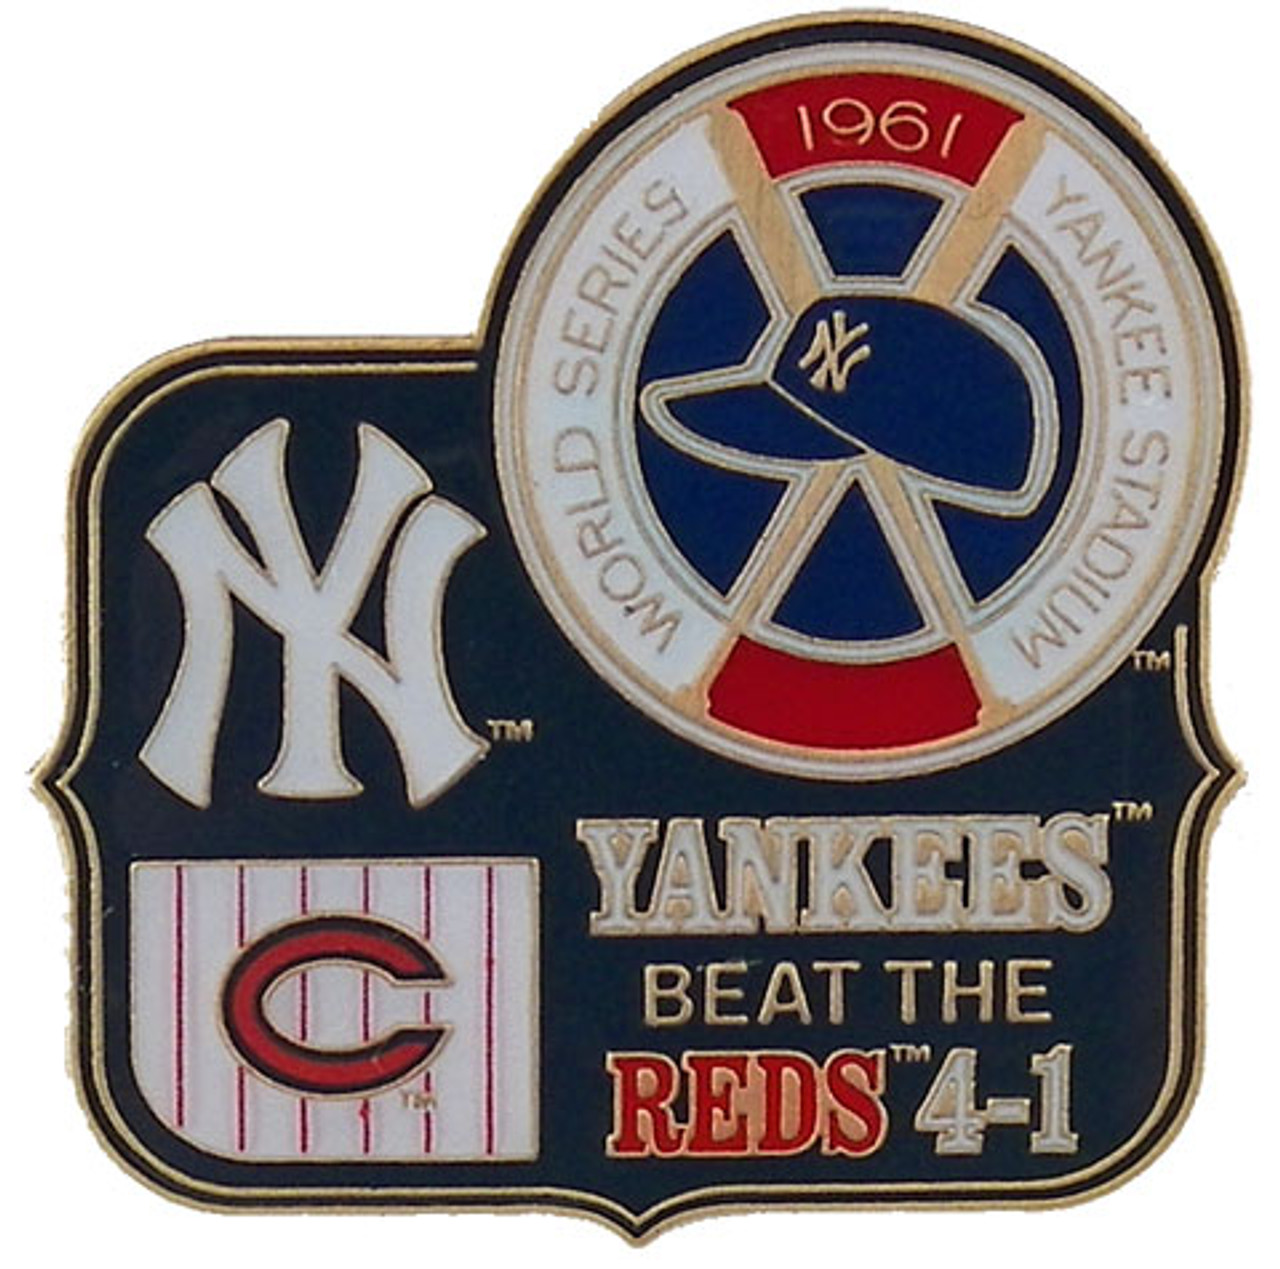 1961 World Series Commemorative Pin - Yankees vs. Reds